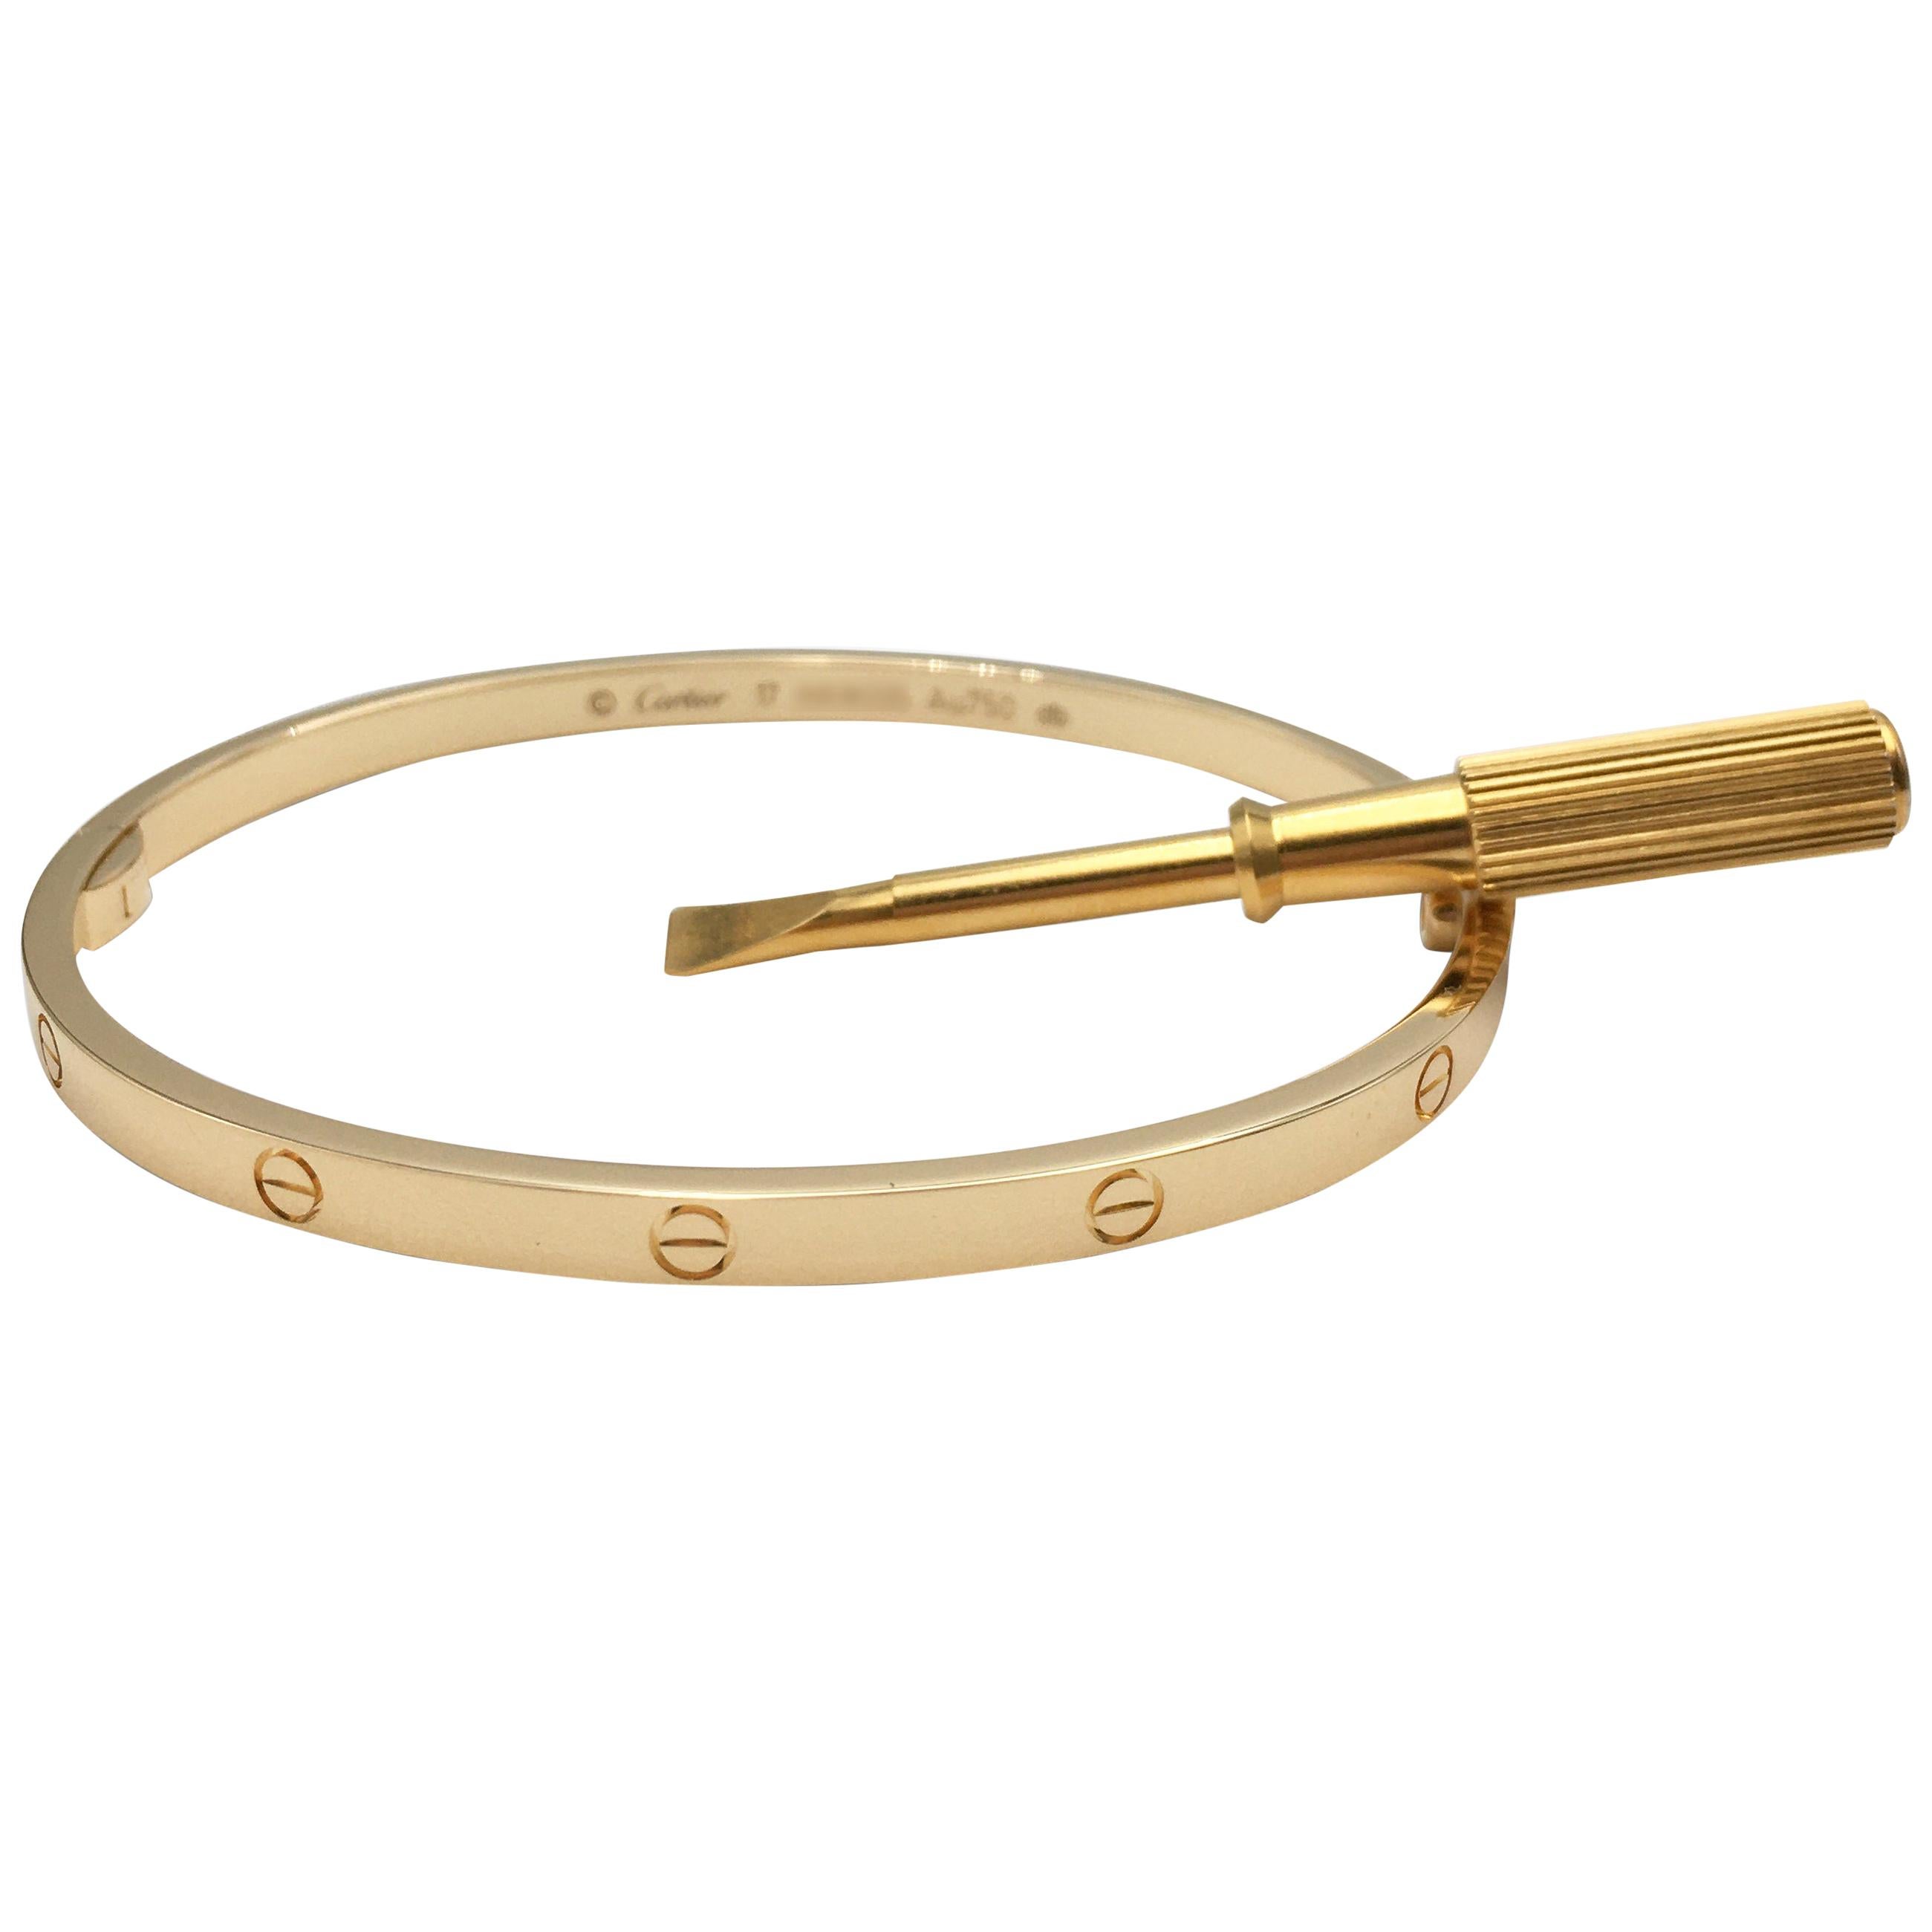 Cartier 'Love' Yellow Gold Bracelet, SM